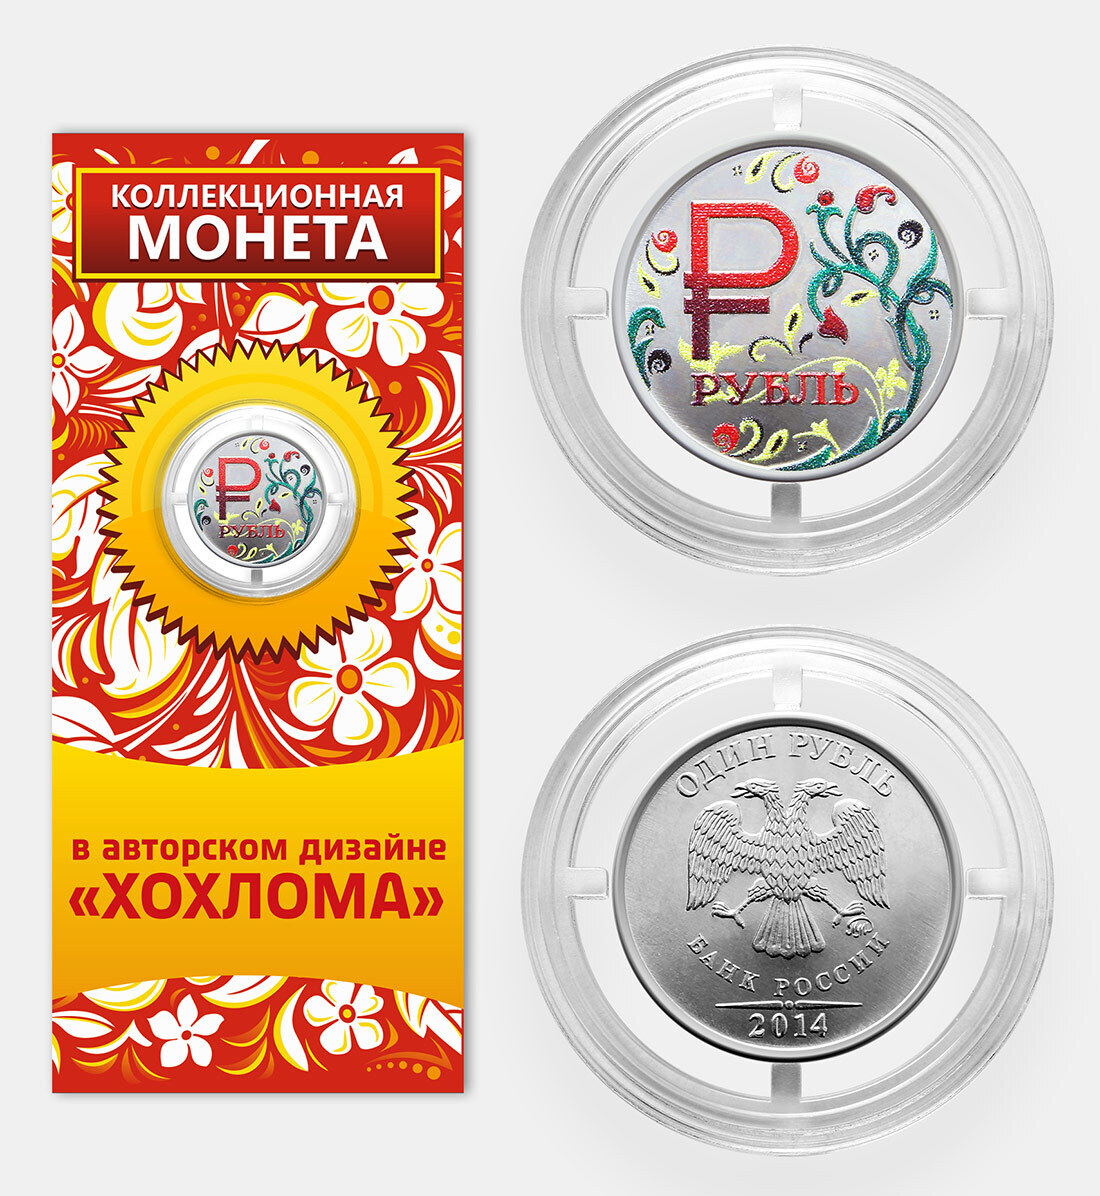 Монета знак рубля. Монета с символом рубля. Монеты России 1 рубль. Фармазонский рубль.